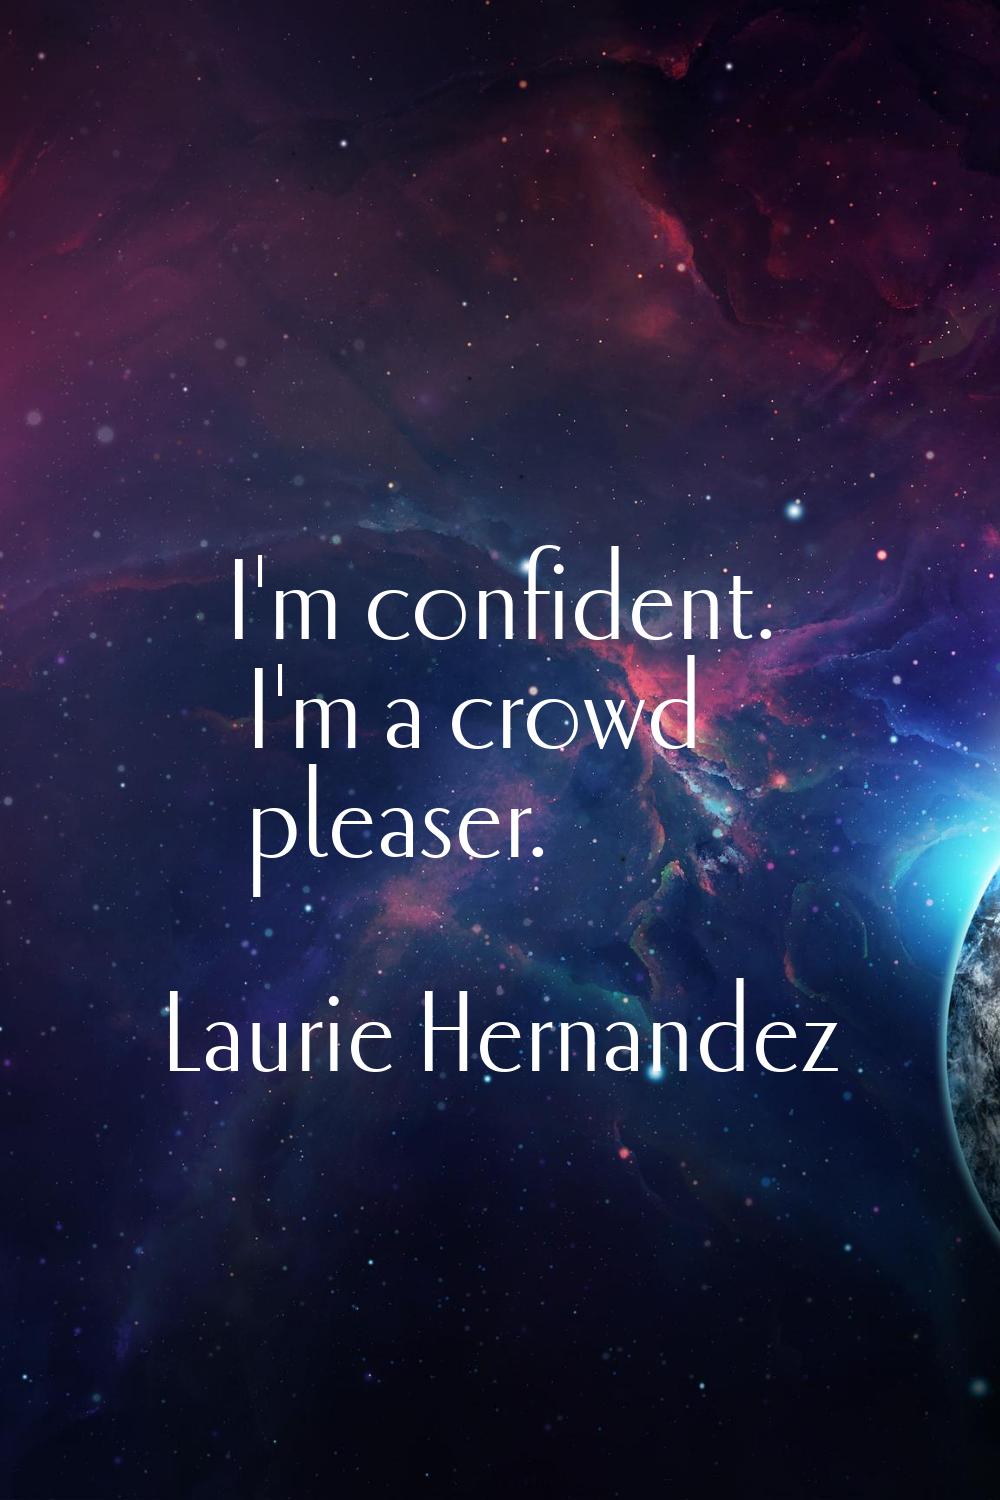 I'm confident. I'm a crowd pleaser.